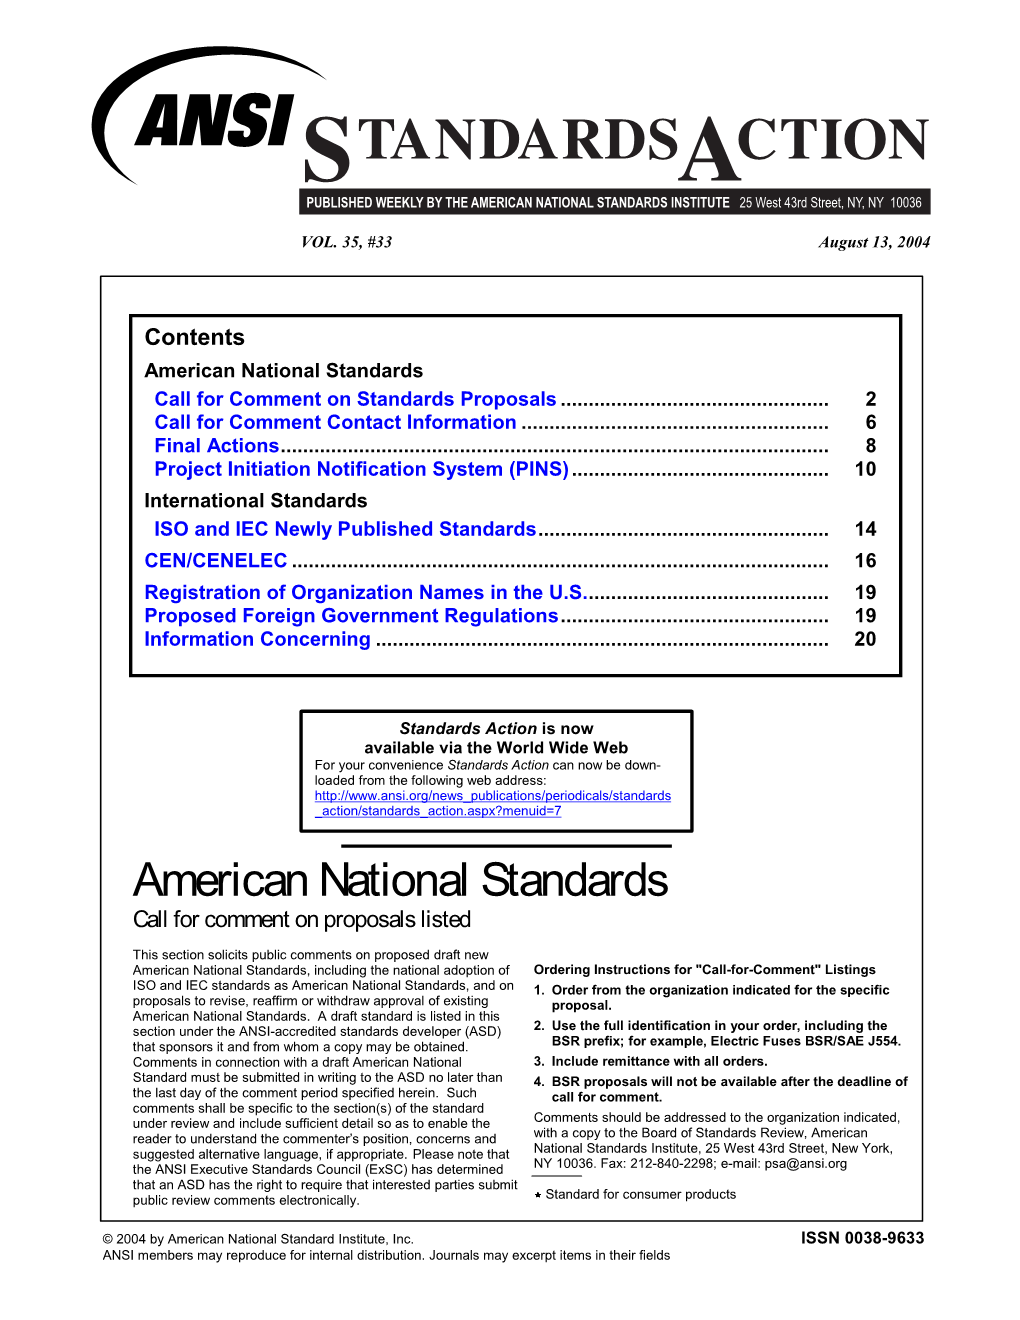 Standards Action Layout SAV3533.Fp5